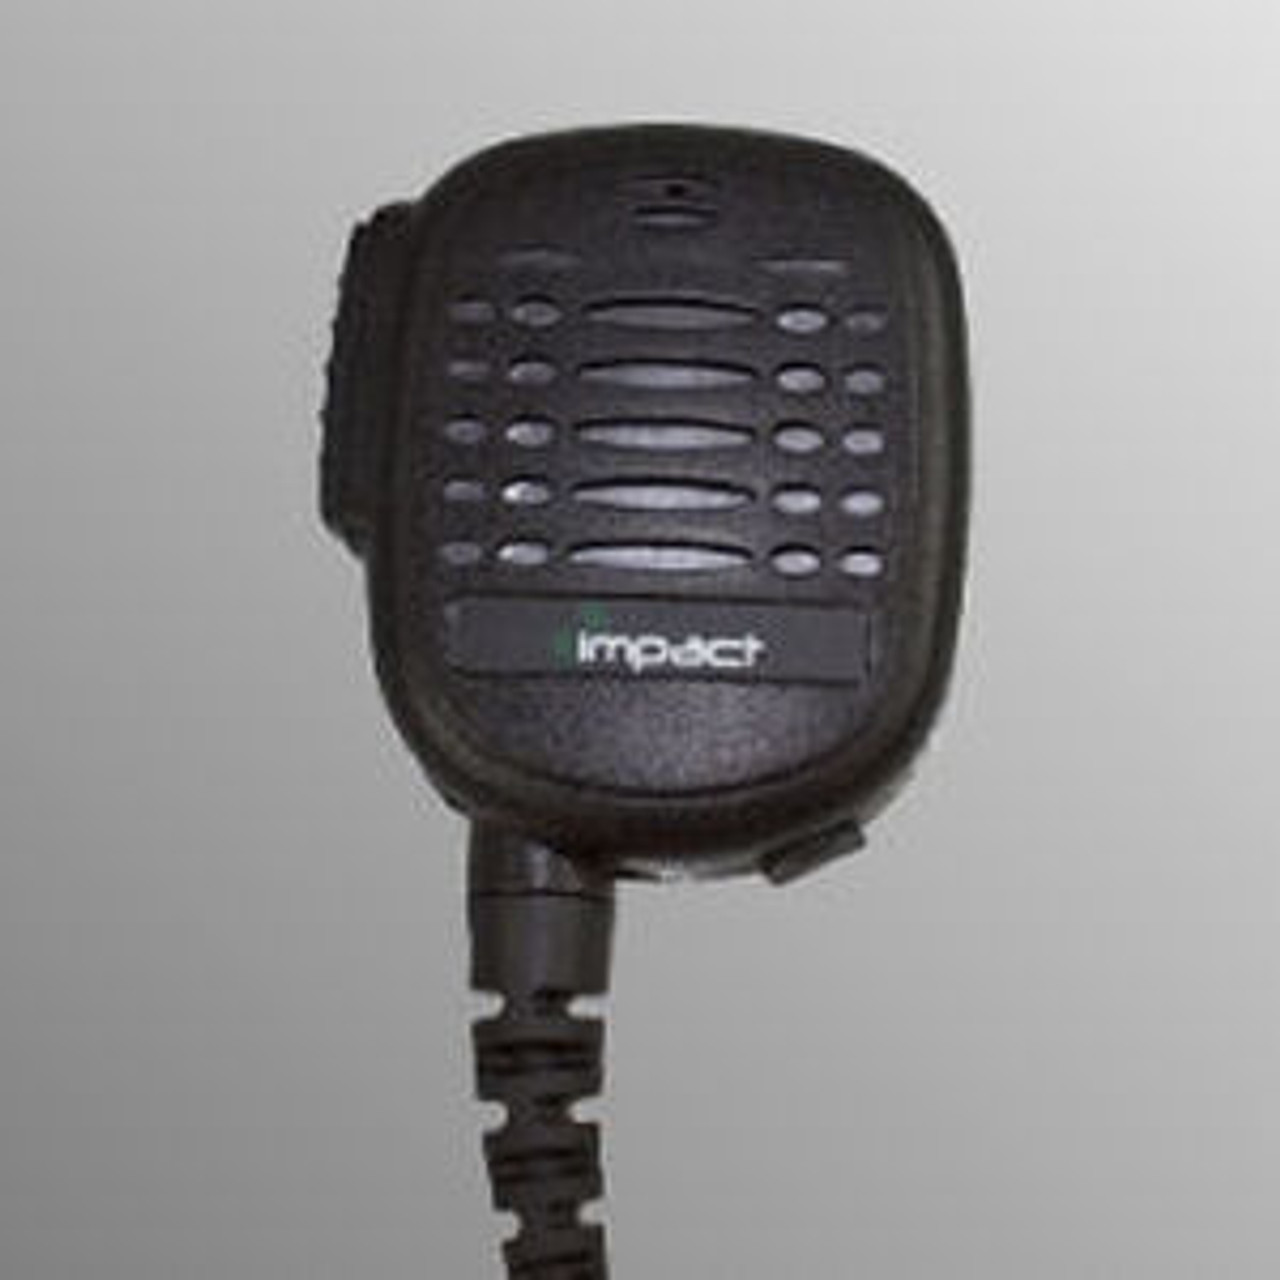 Kenwood NX-5400 Noise Canceling Speaker Mic.